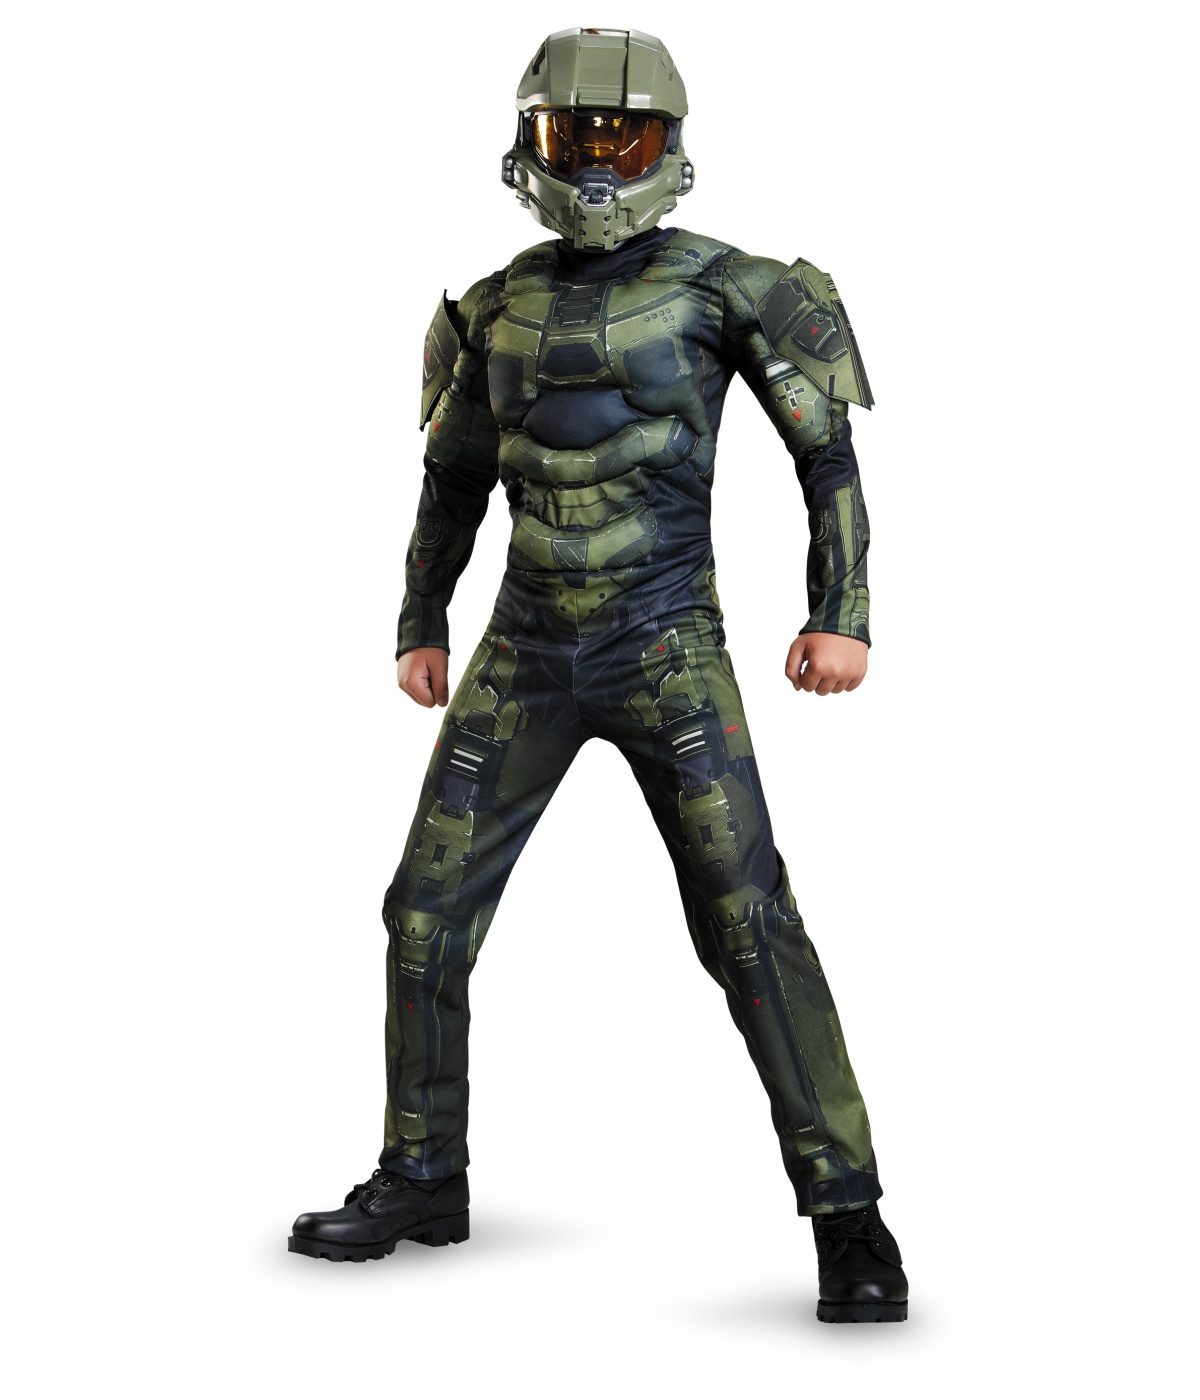  Boys Halo Master Chief Costume